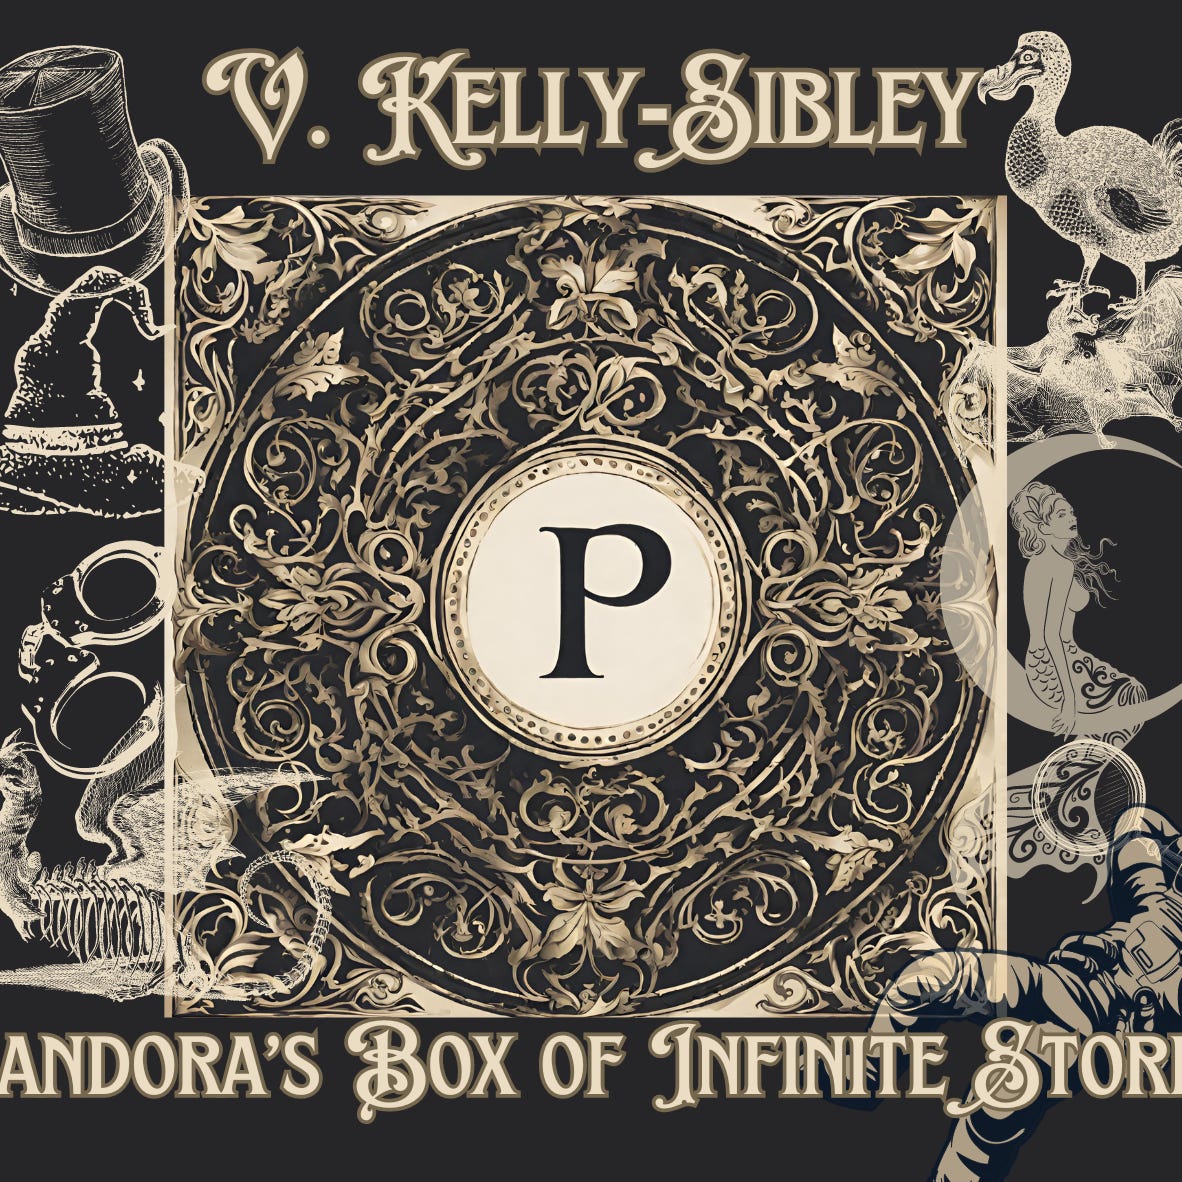 Artwork for Pandora's Box of Infinite Stories